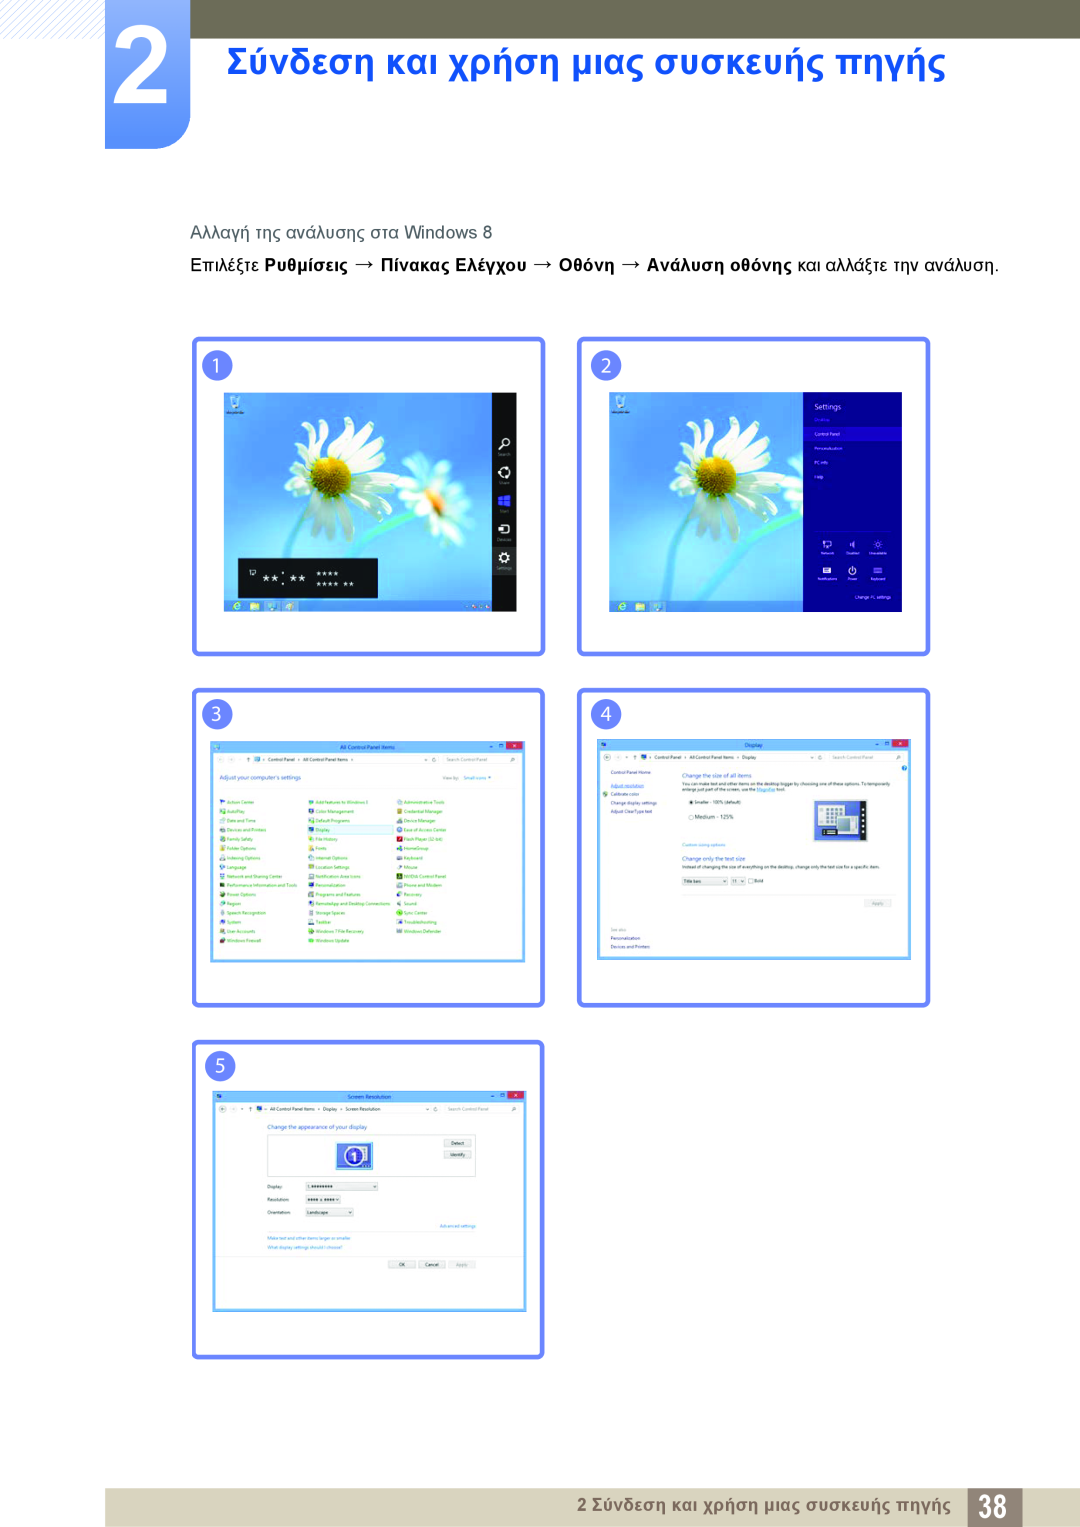 Samsung LS22C45KBW/EN, LS22C45KMS/EN manual 2 Σύνδεση και χρήση μιας συσκευής πηγής, Αλλαγή της ανάλυσης στα Windows 